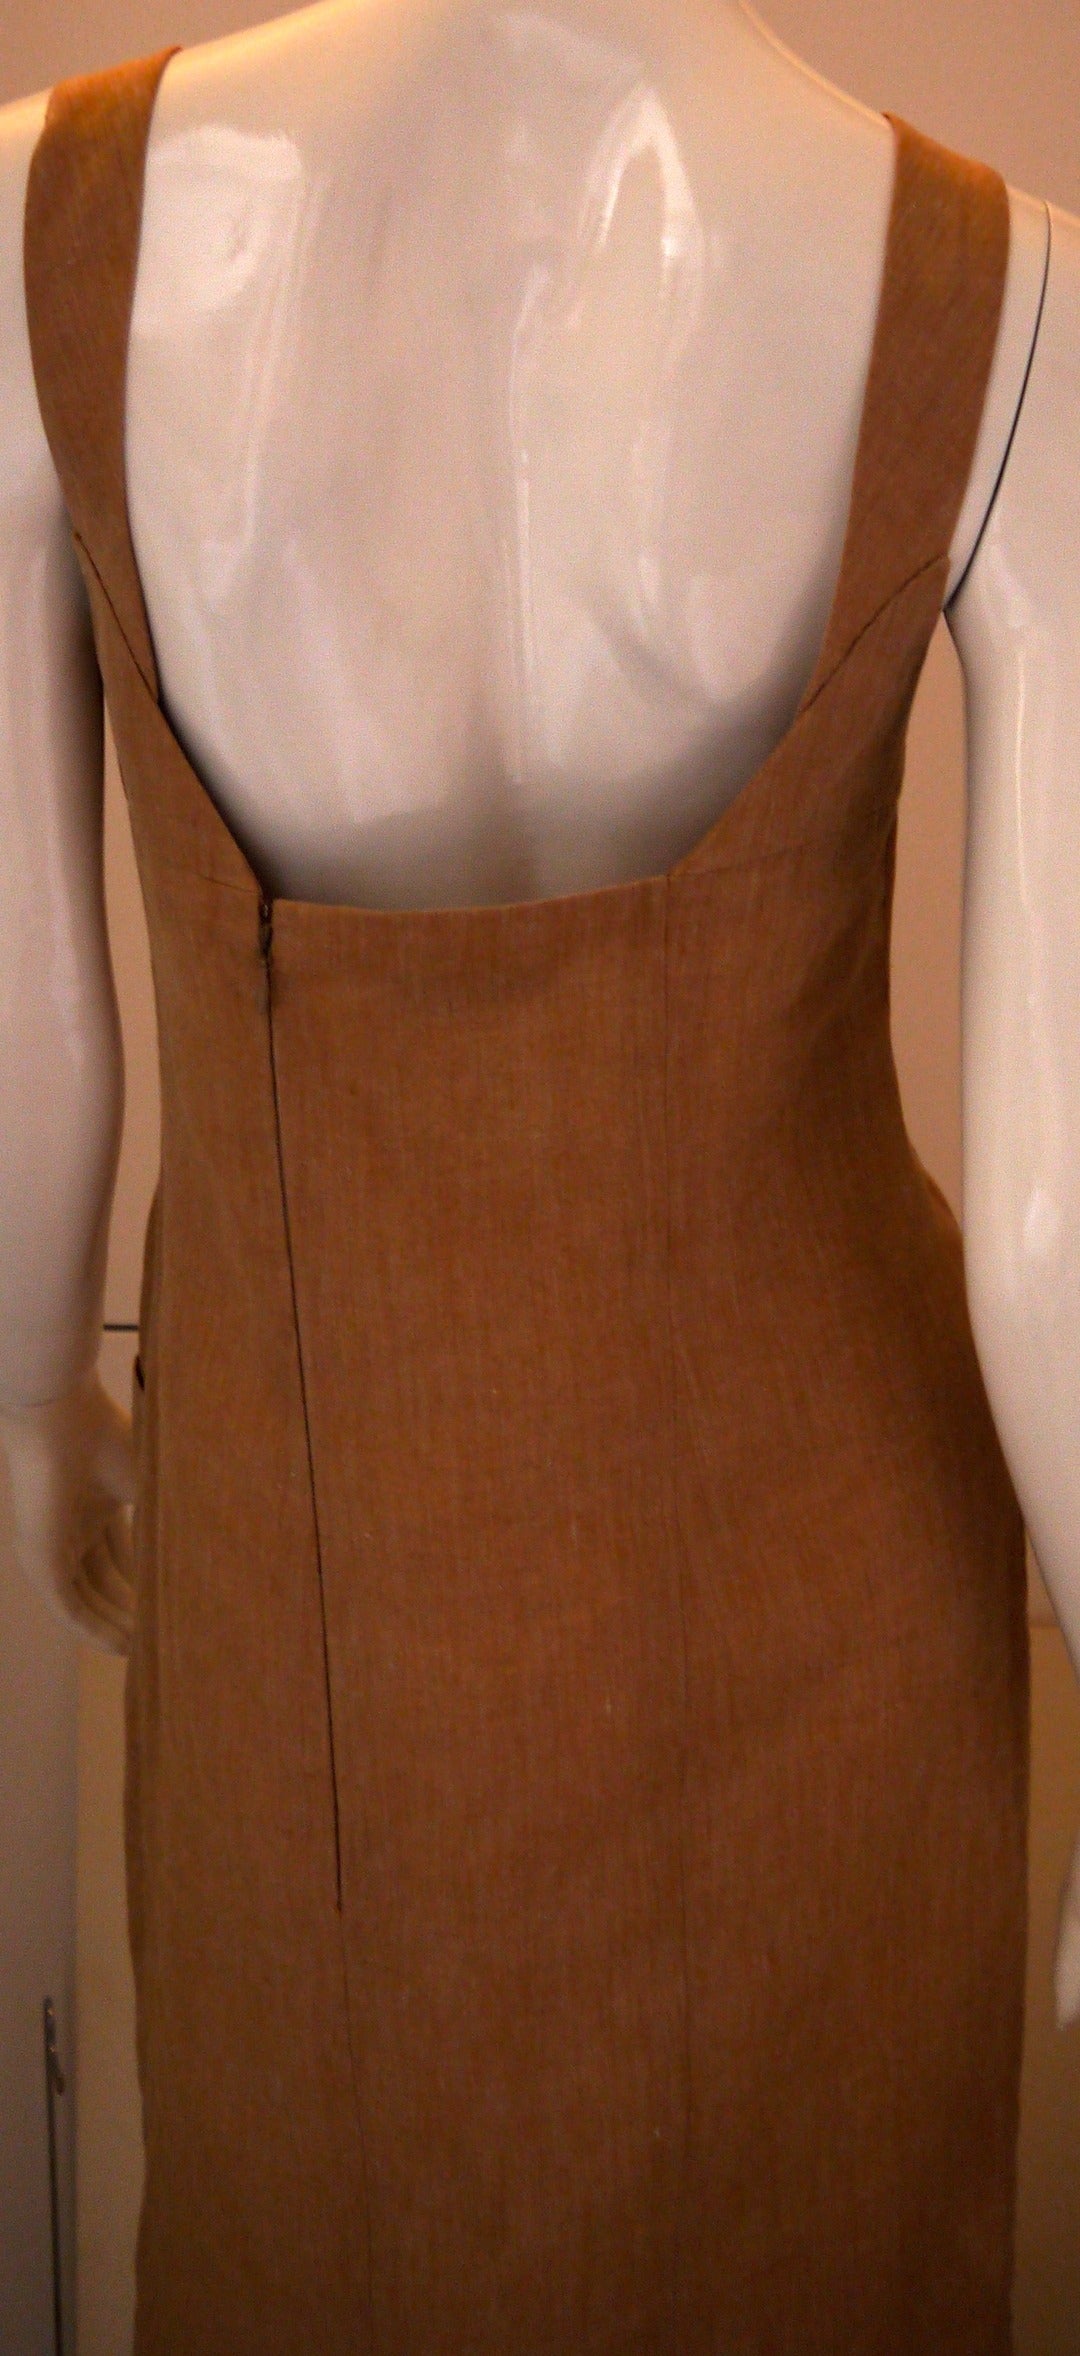 1980's Chanel Beige Linen Dress Suit - Jacket and Dress - Size 38 For Sale 1